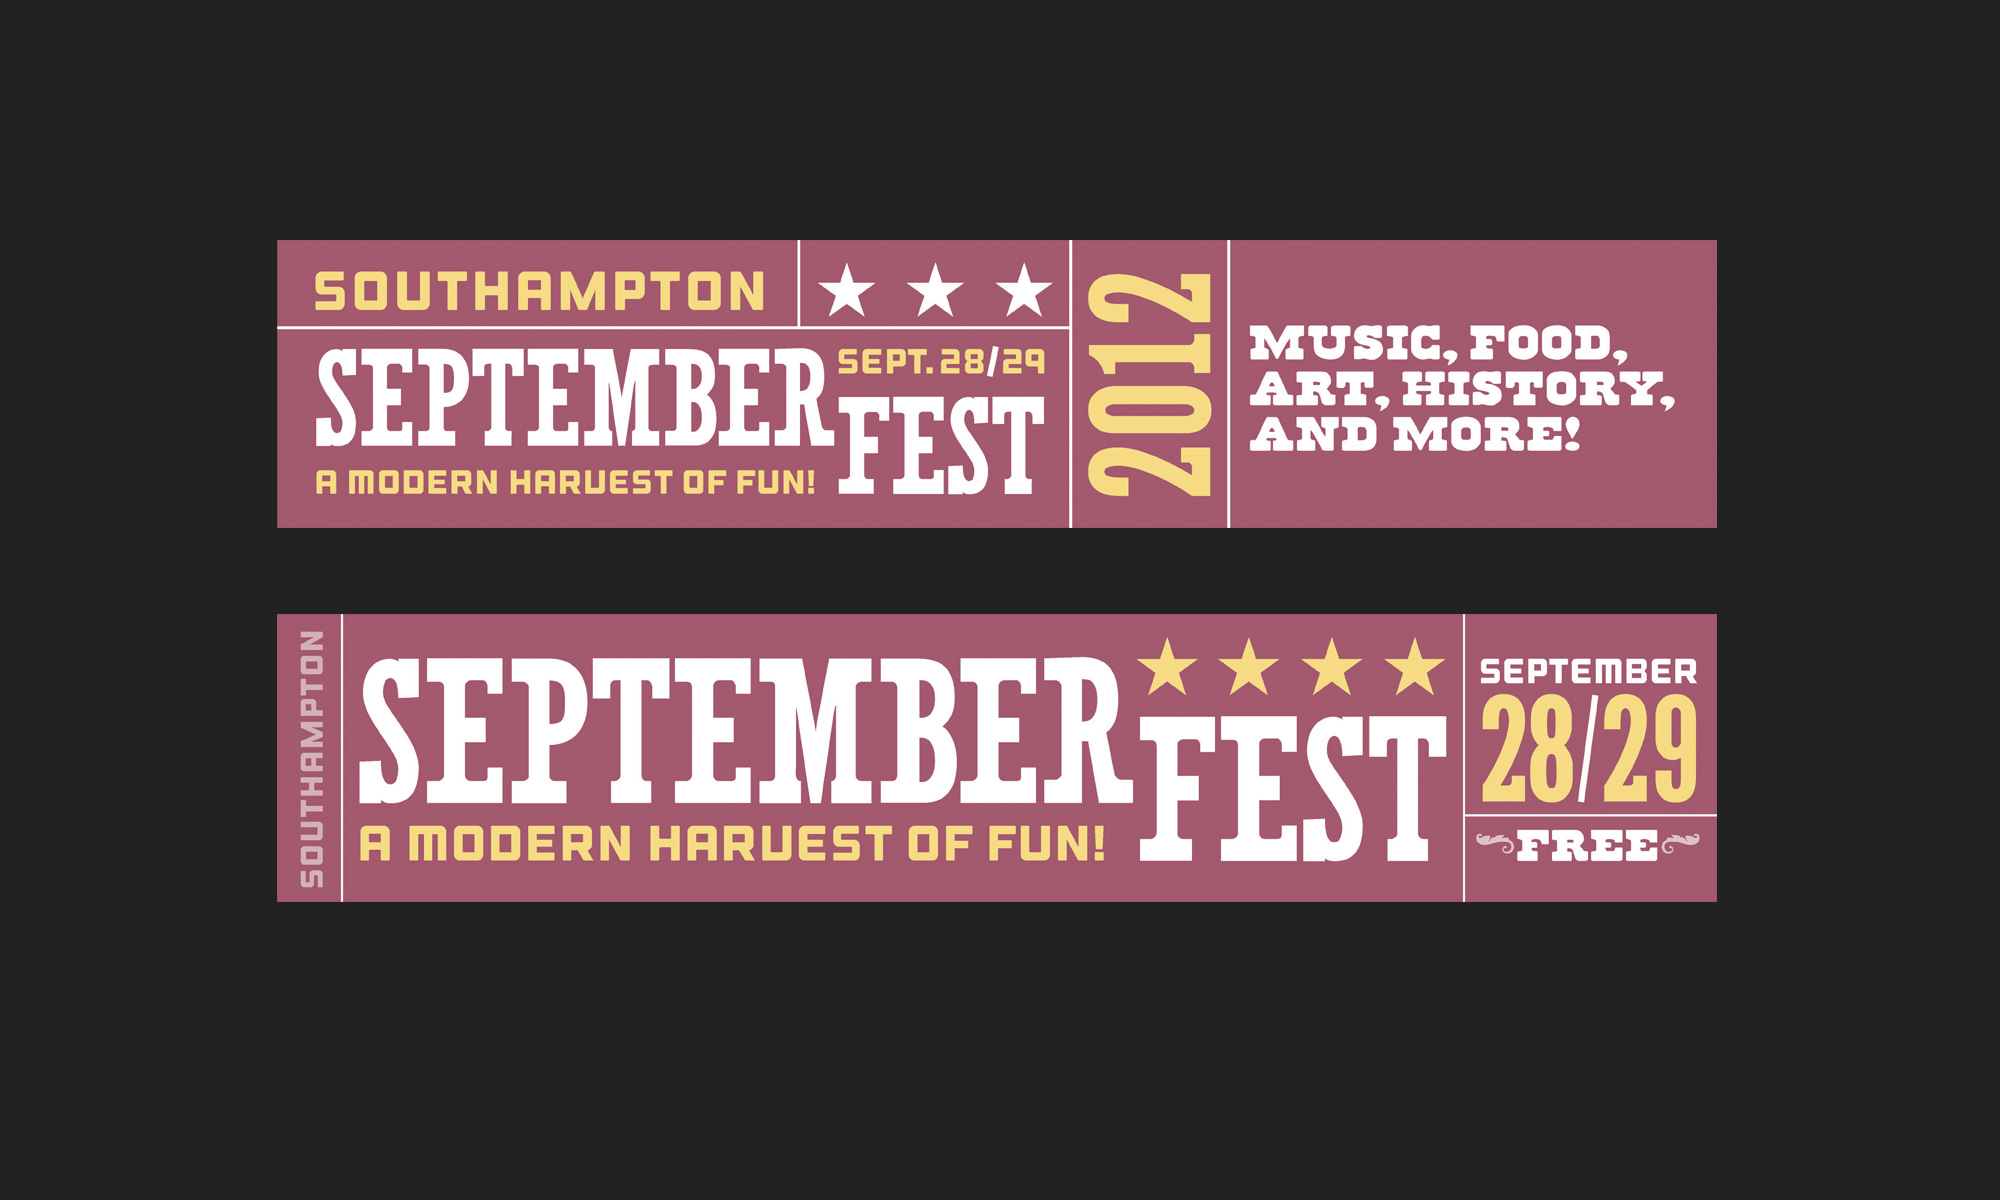 Southampton Septemberfest Banners